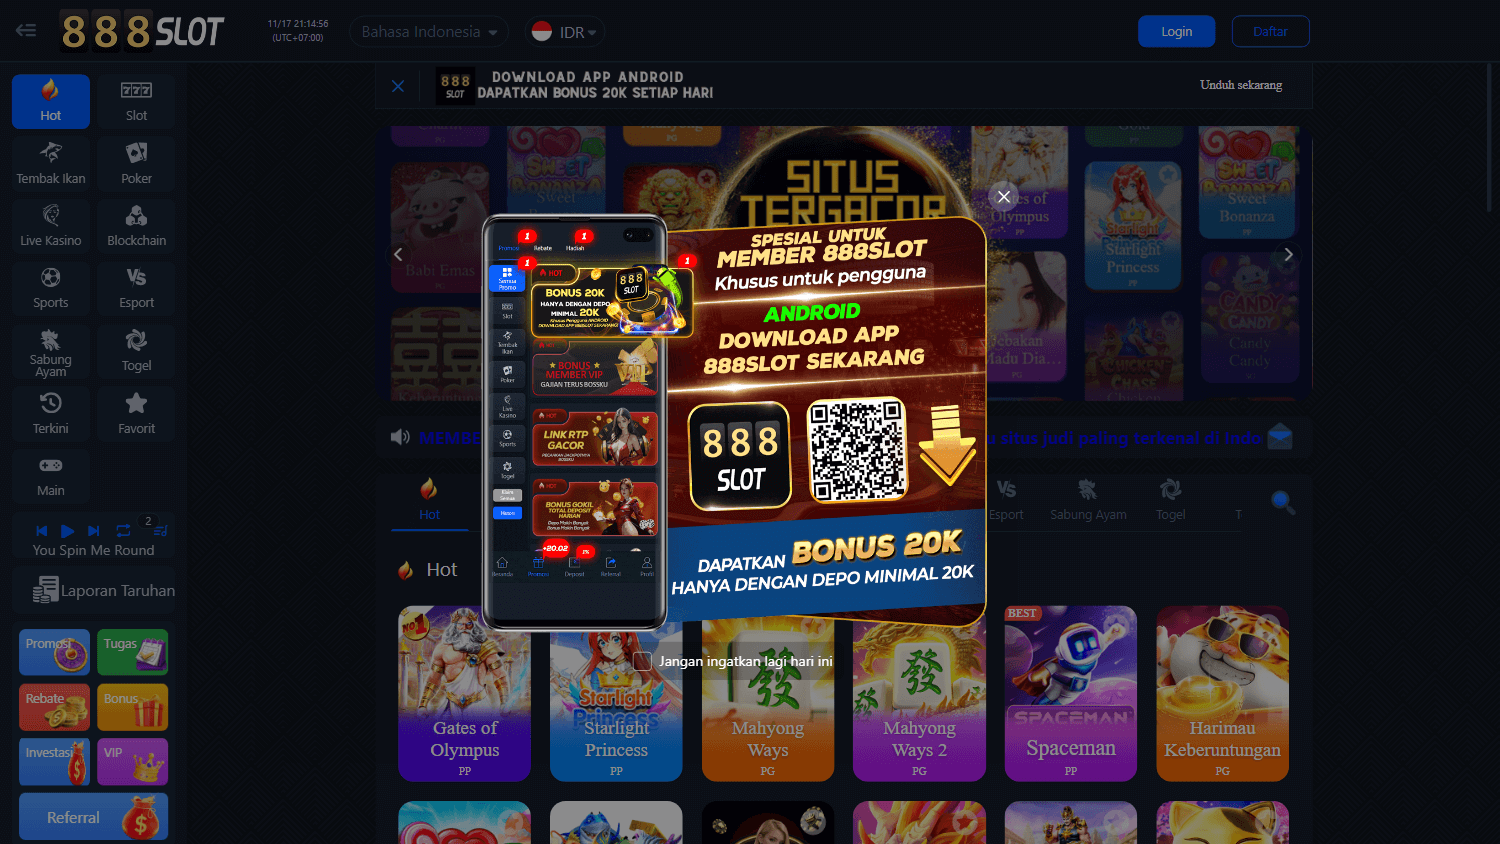 888slot_casino_homepage_desktop